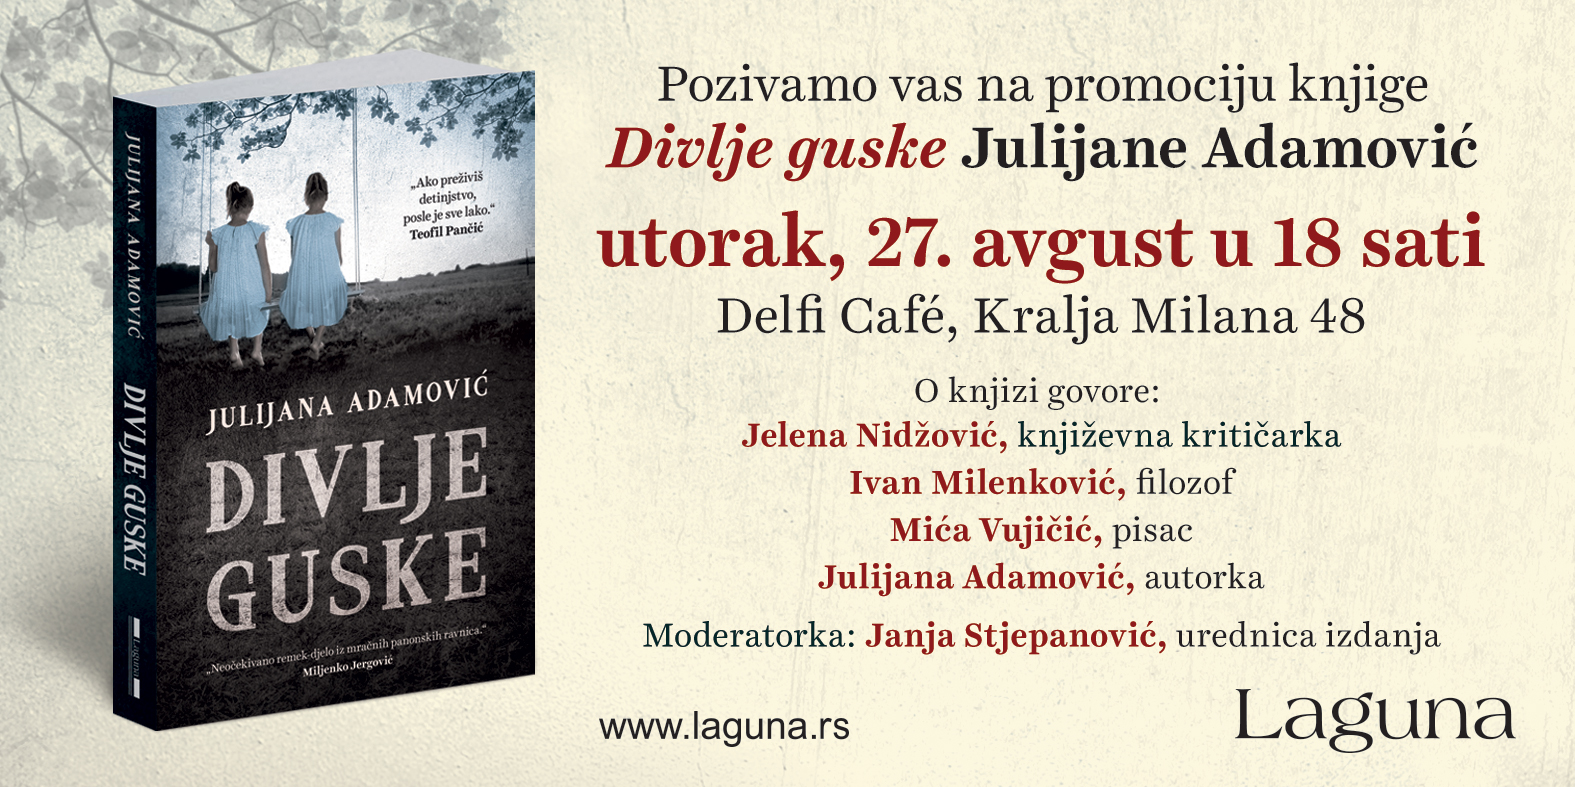 Promocija knjige “Divlje guske” Julijane Adamović